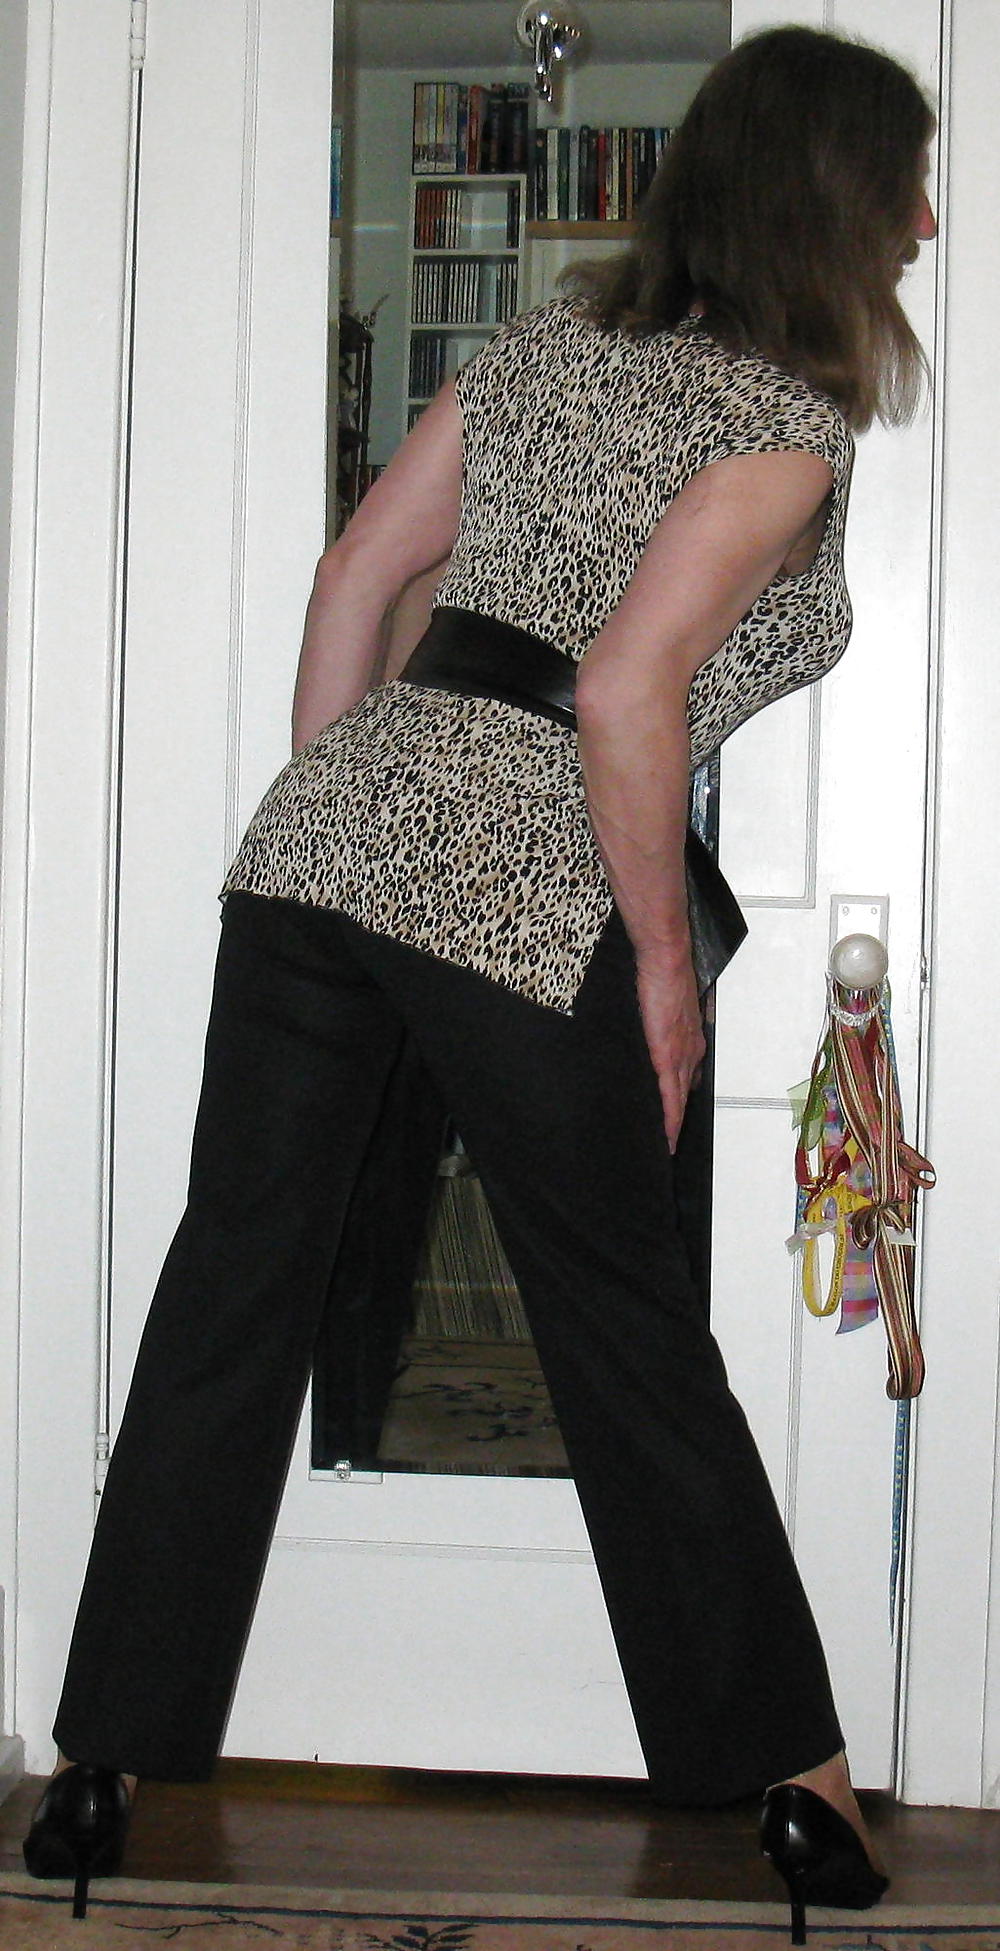 Crossdressing - ragazza leopardo
 #7202421